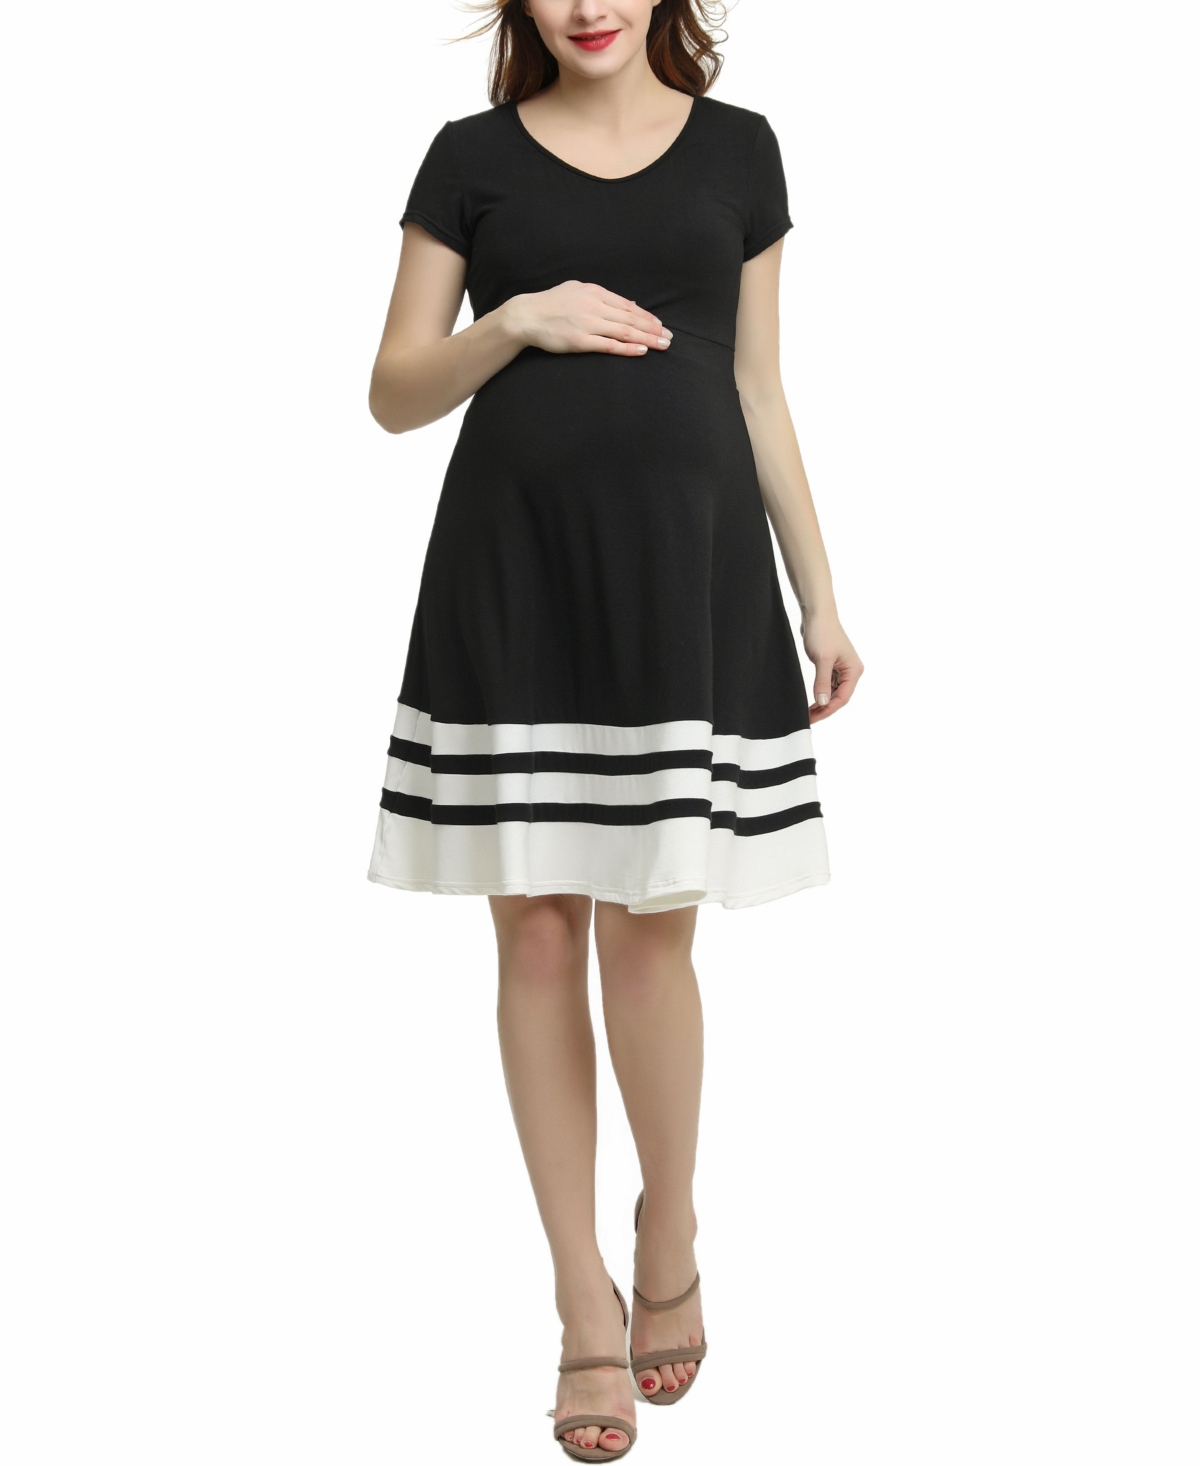 kimi + kai Maternity Colorblock Skater Dress - Black/white